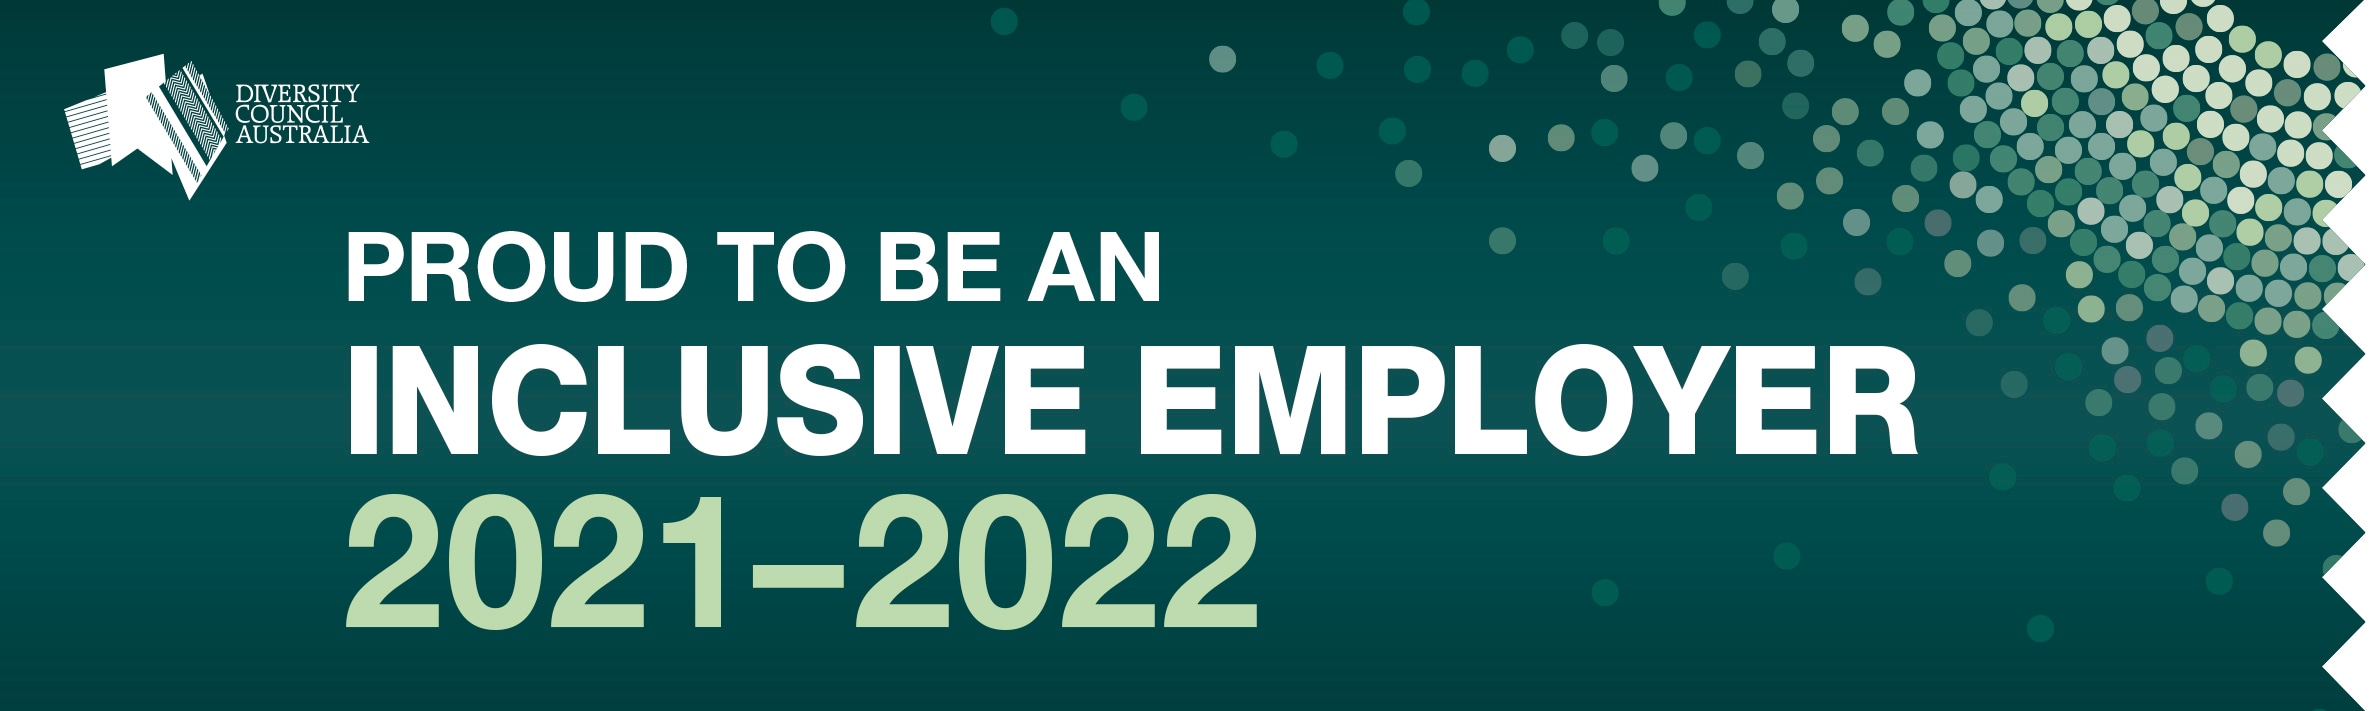 John Deere named an Inclusive Employer 2021-2022 by Diversity Council Australia